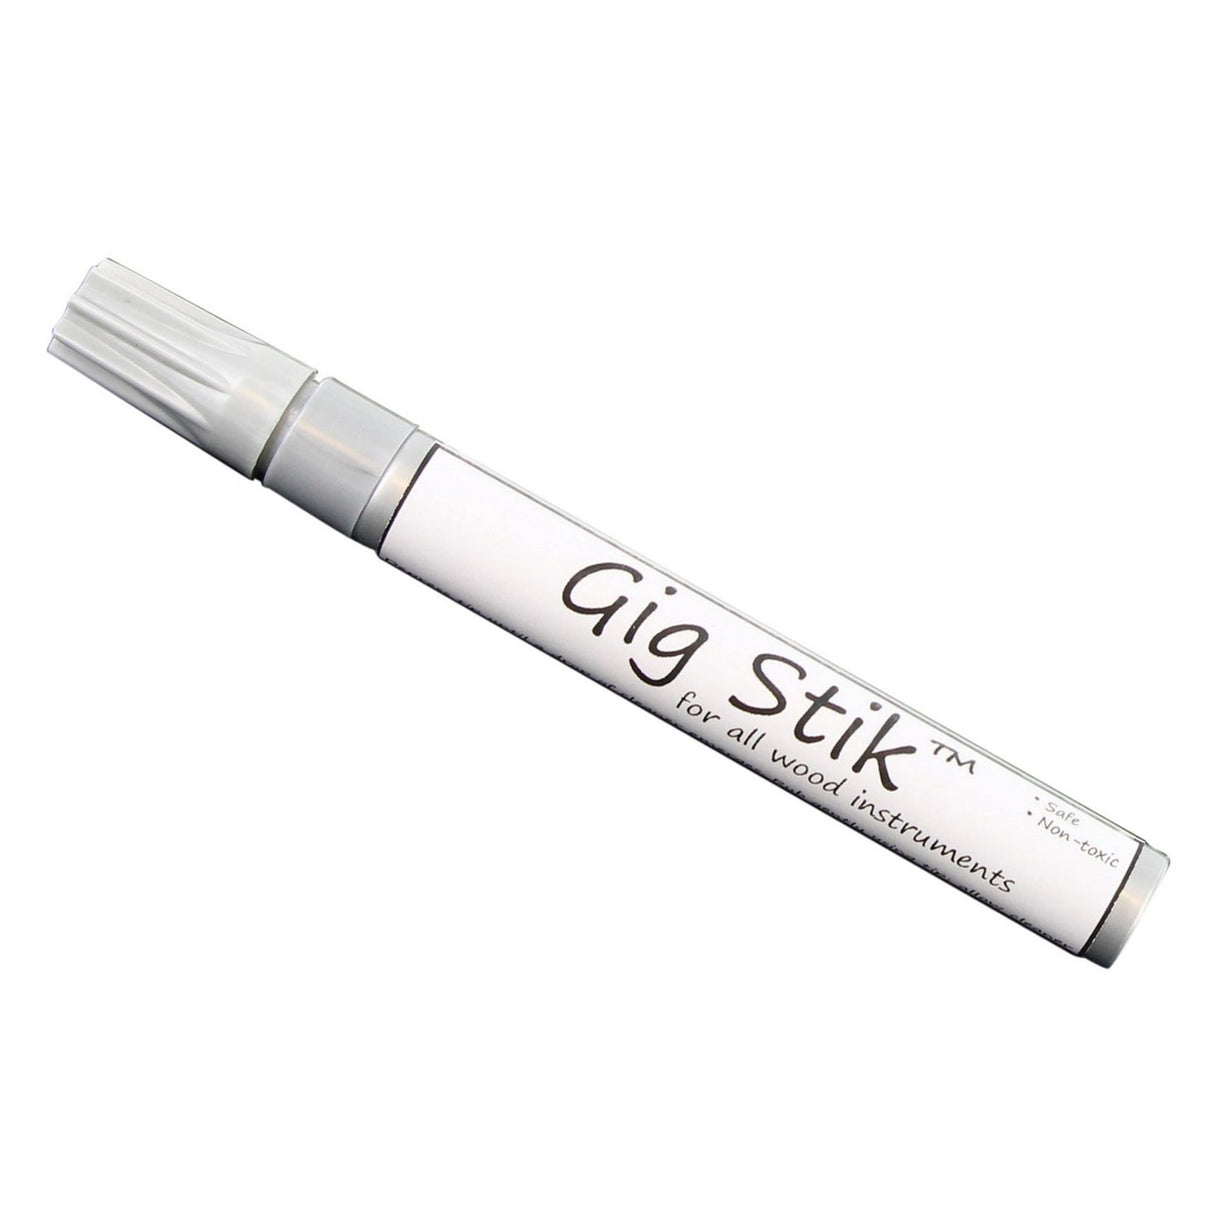 SHAR GS10 | Gig Stik Cleaning Pen